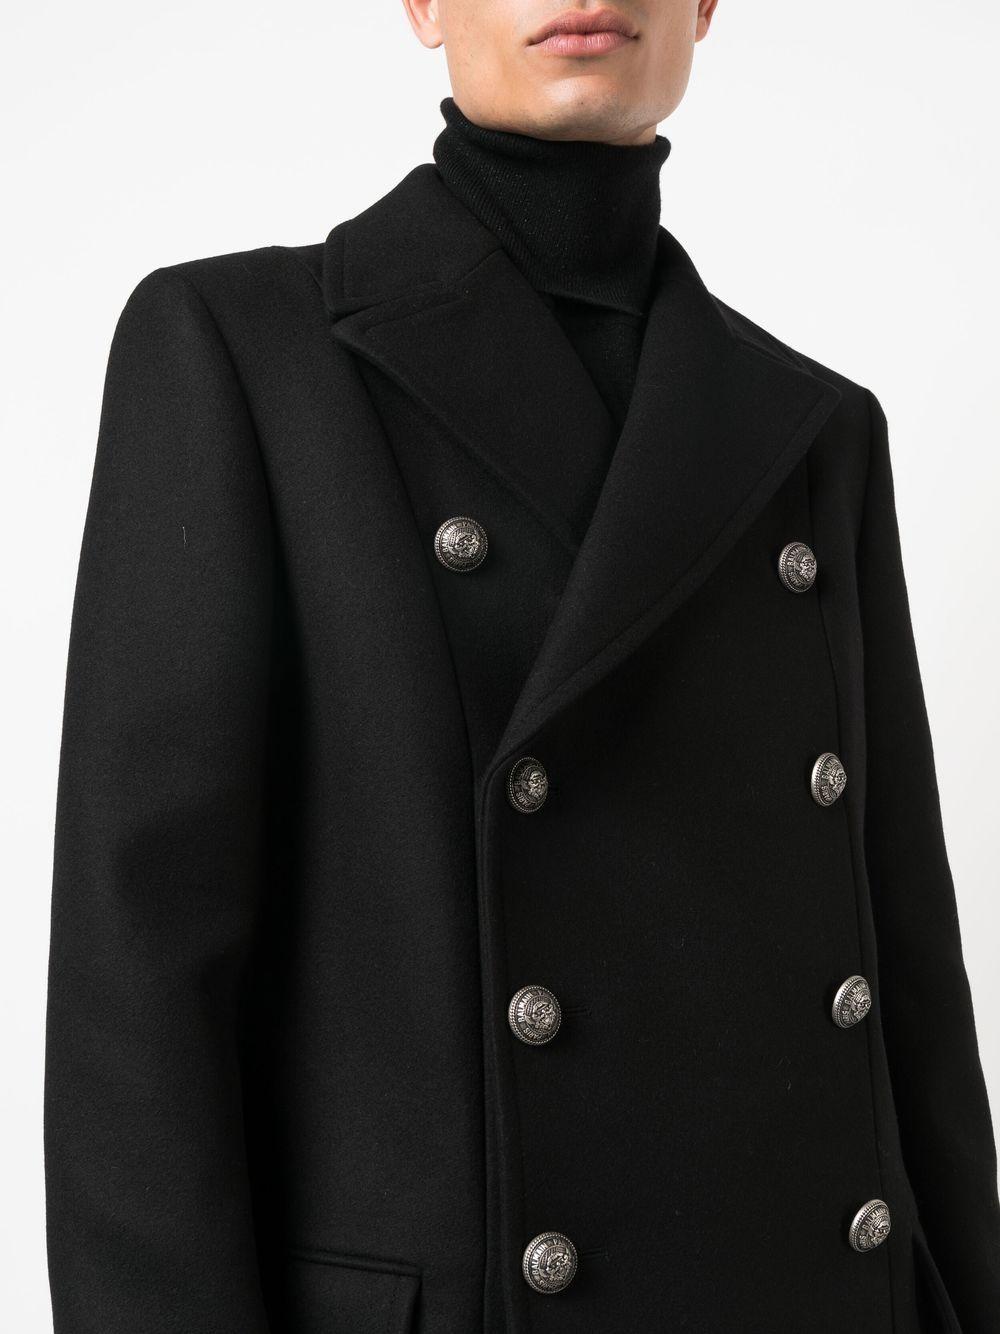 Balmain Wool Coat in Black for Men | Lyst